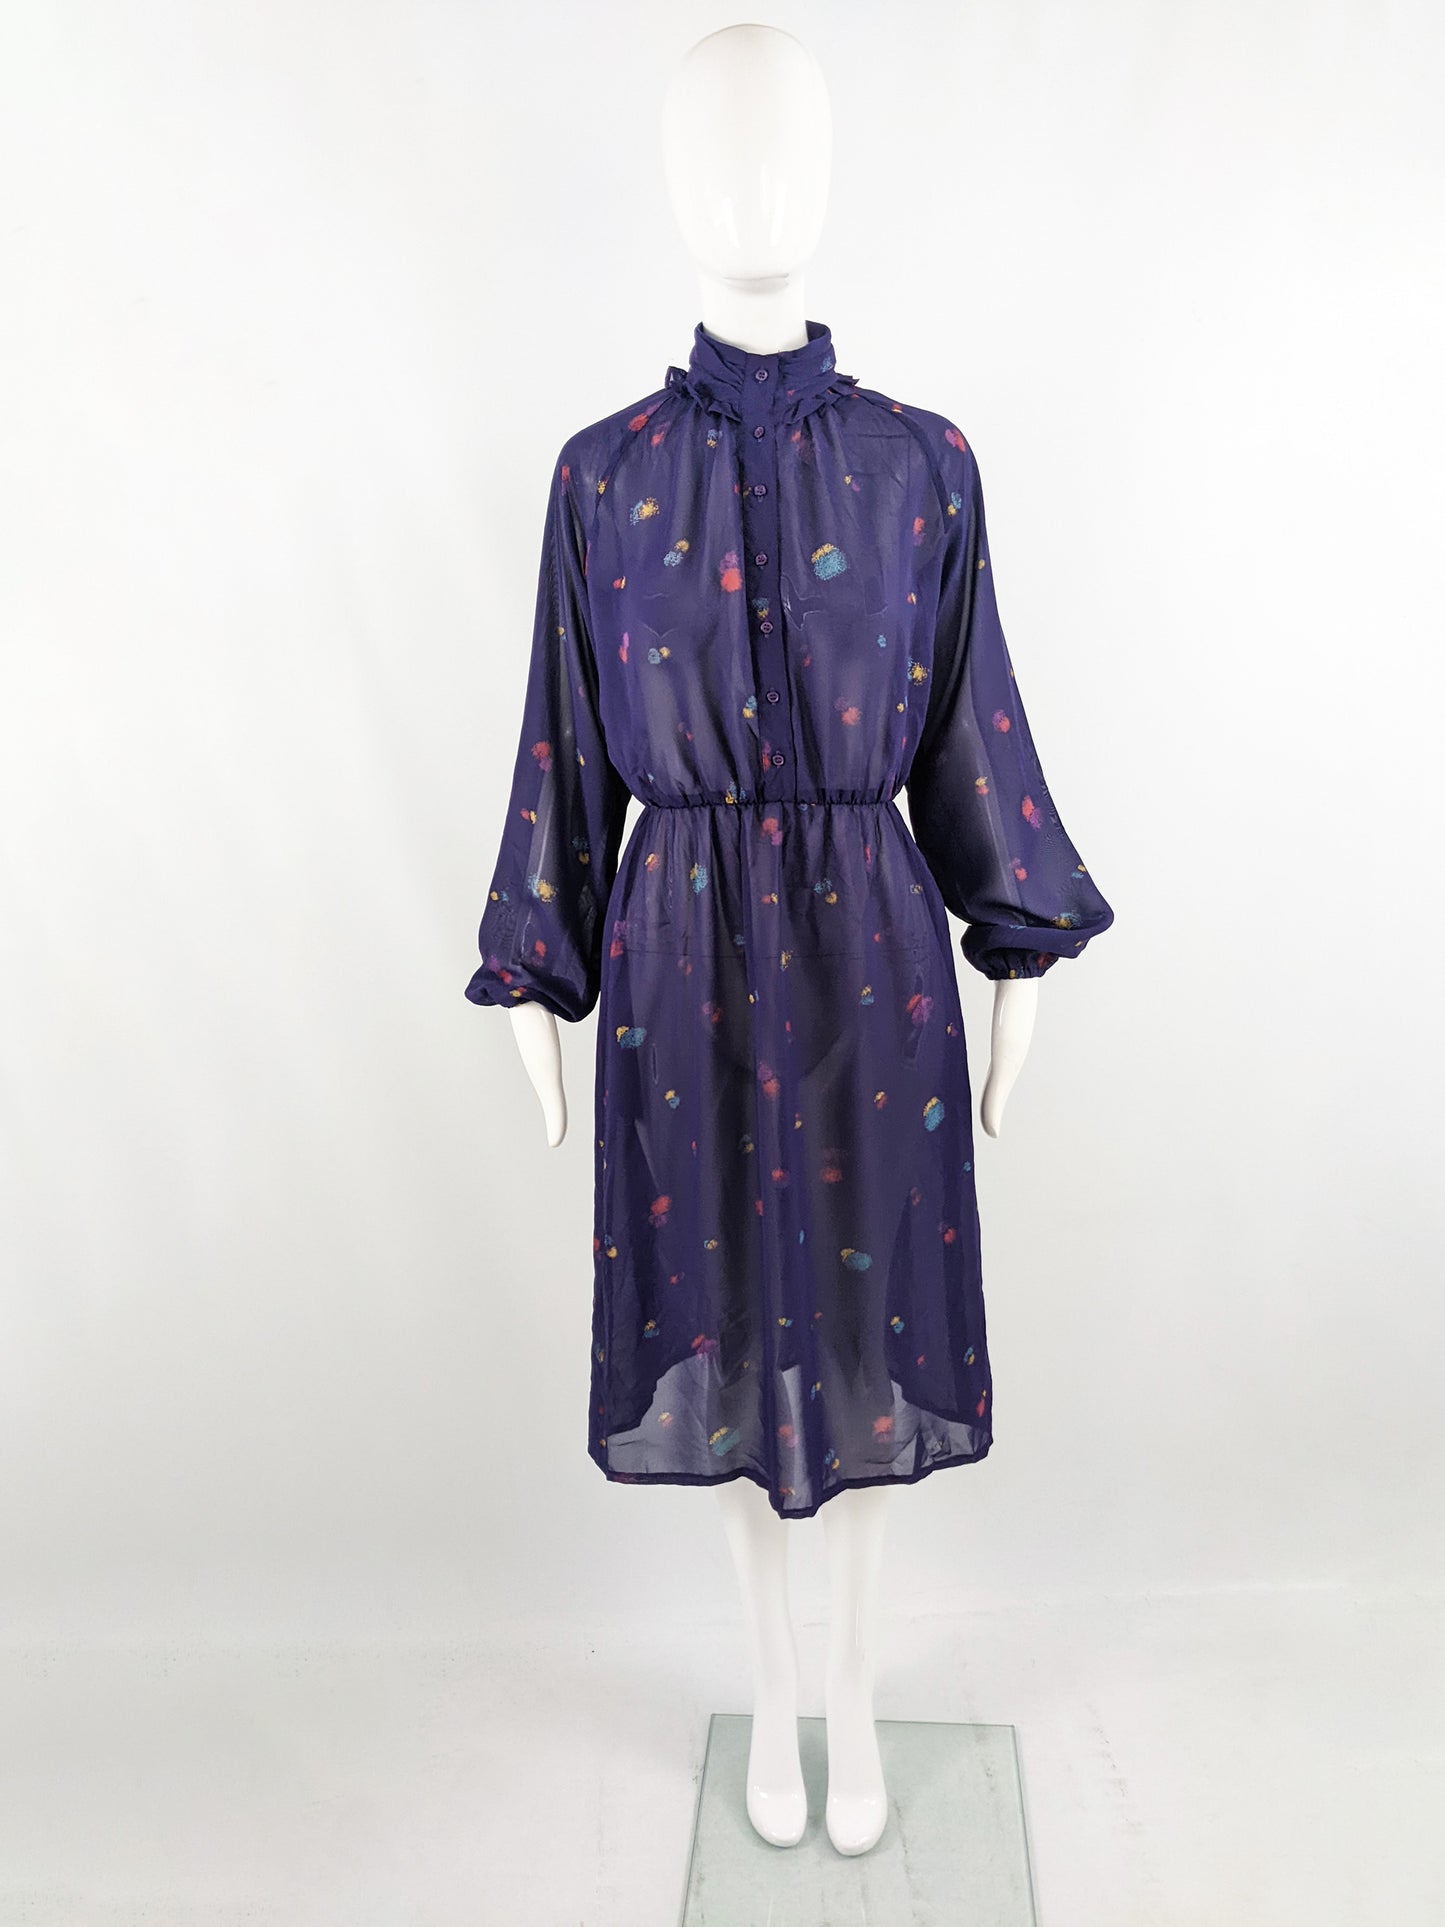 Aroche Paris Vintage Sheer Purple Dress, 1970s